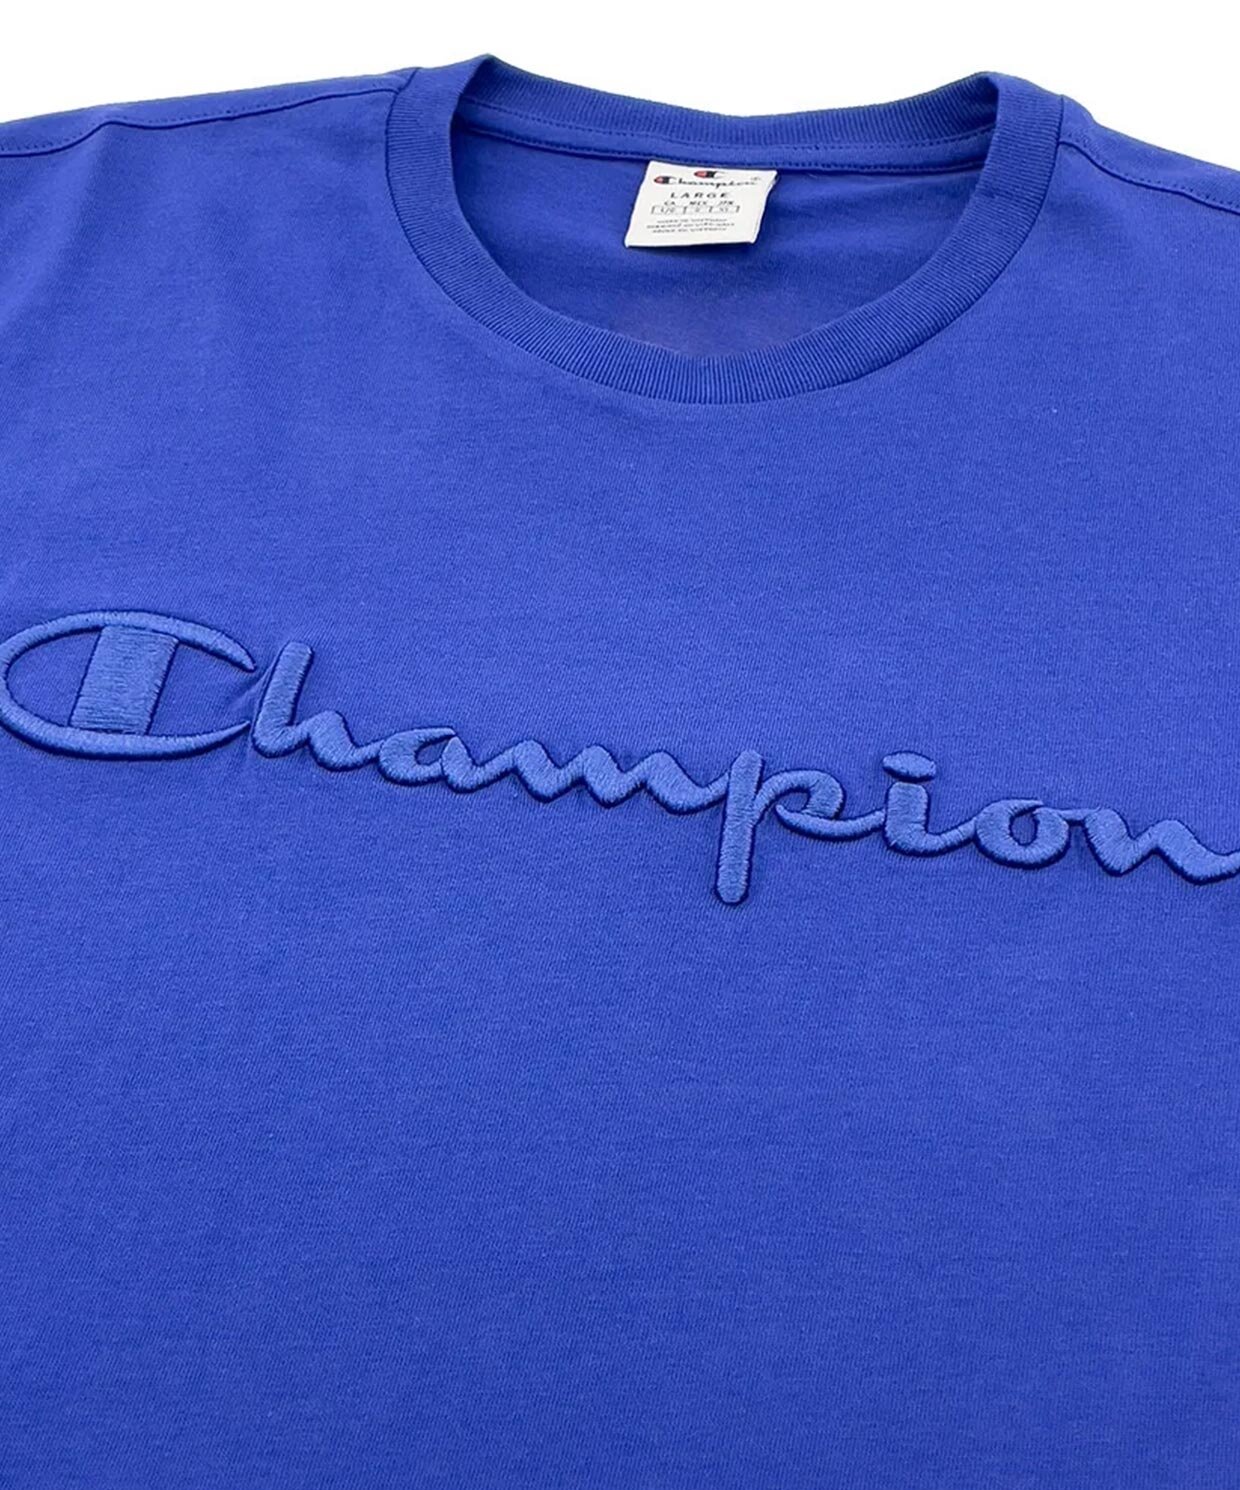 resm Champion Crewneck T-Shirt